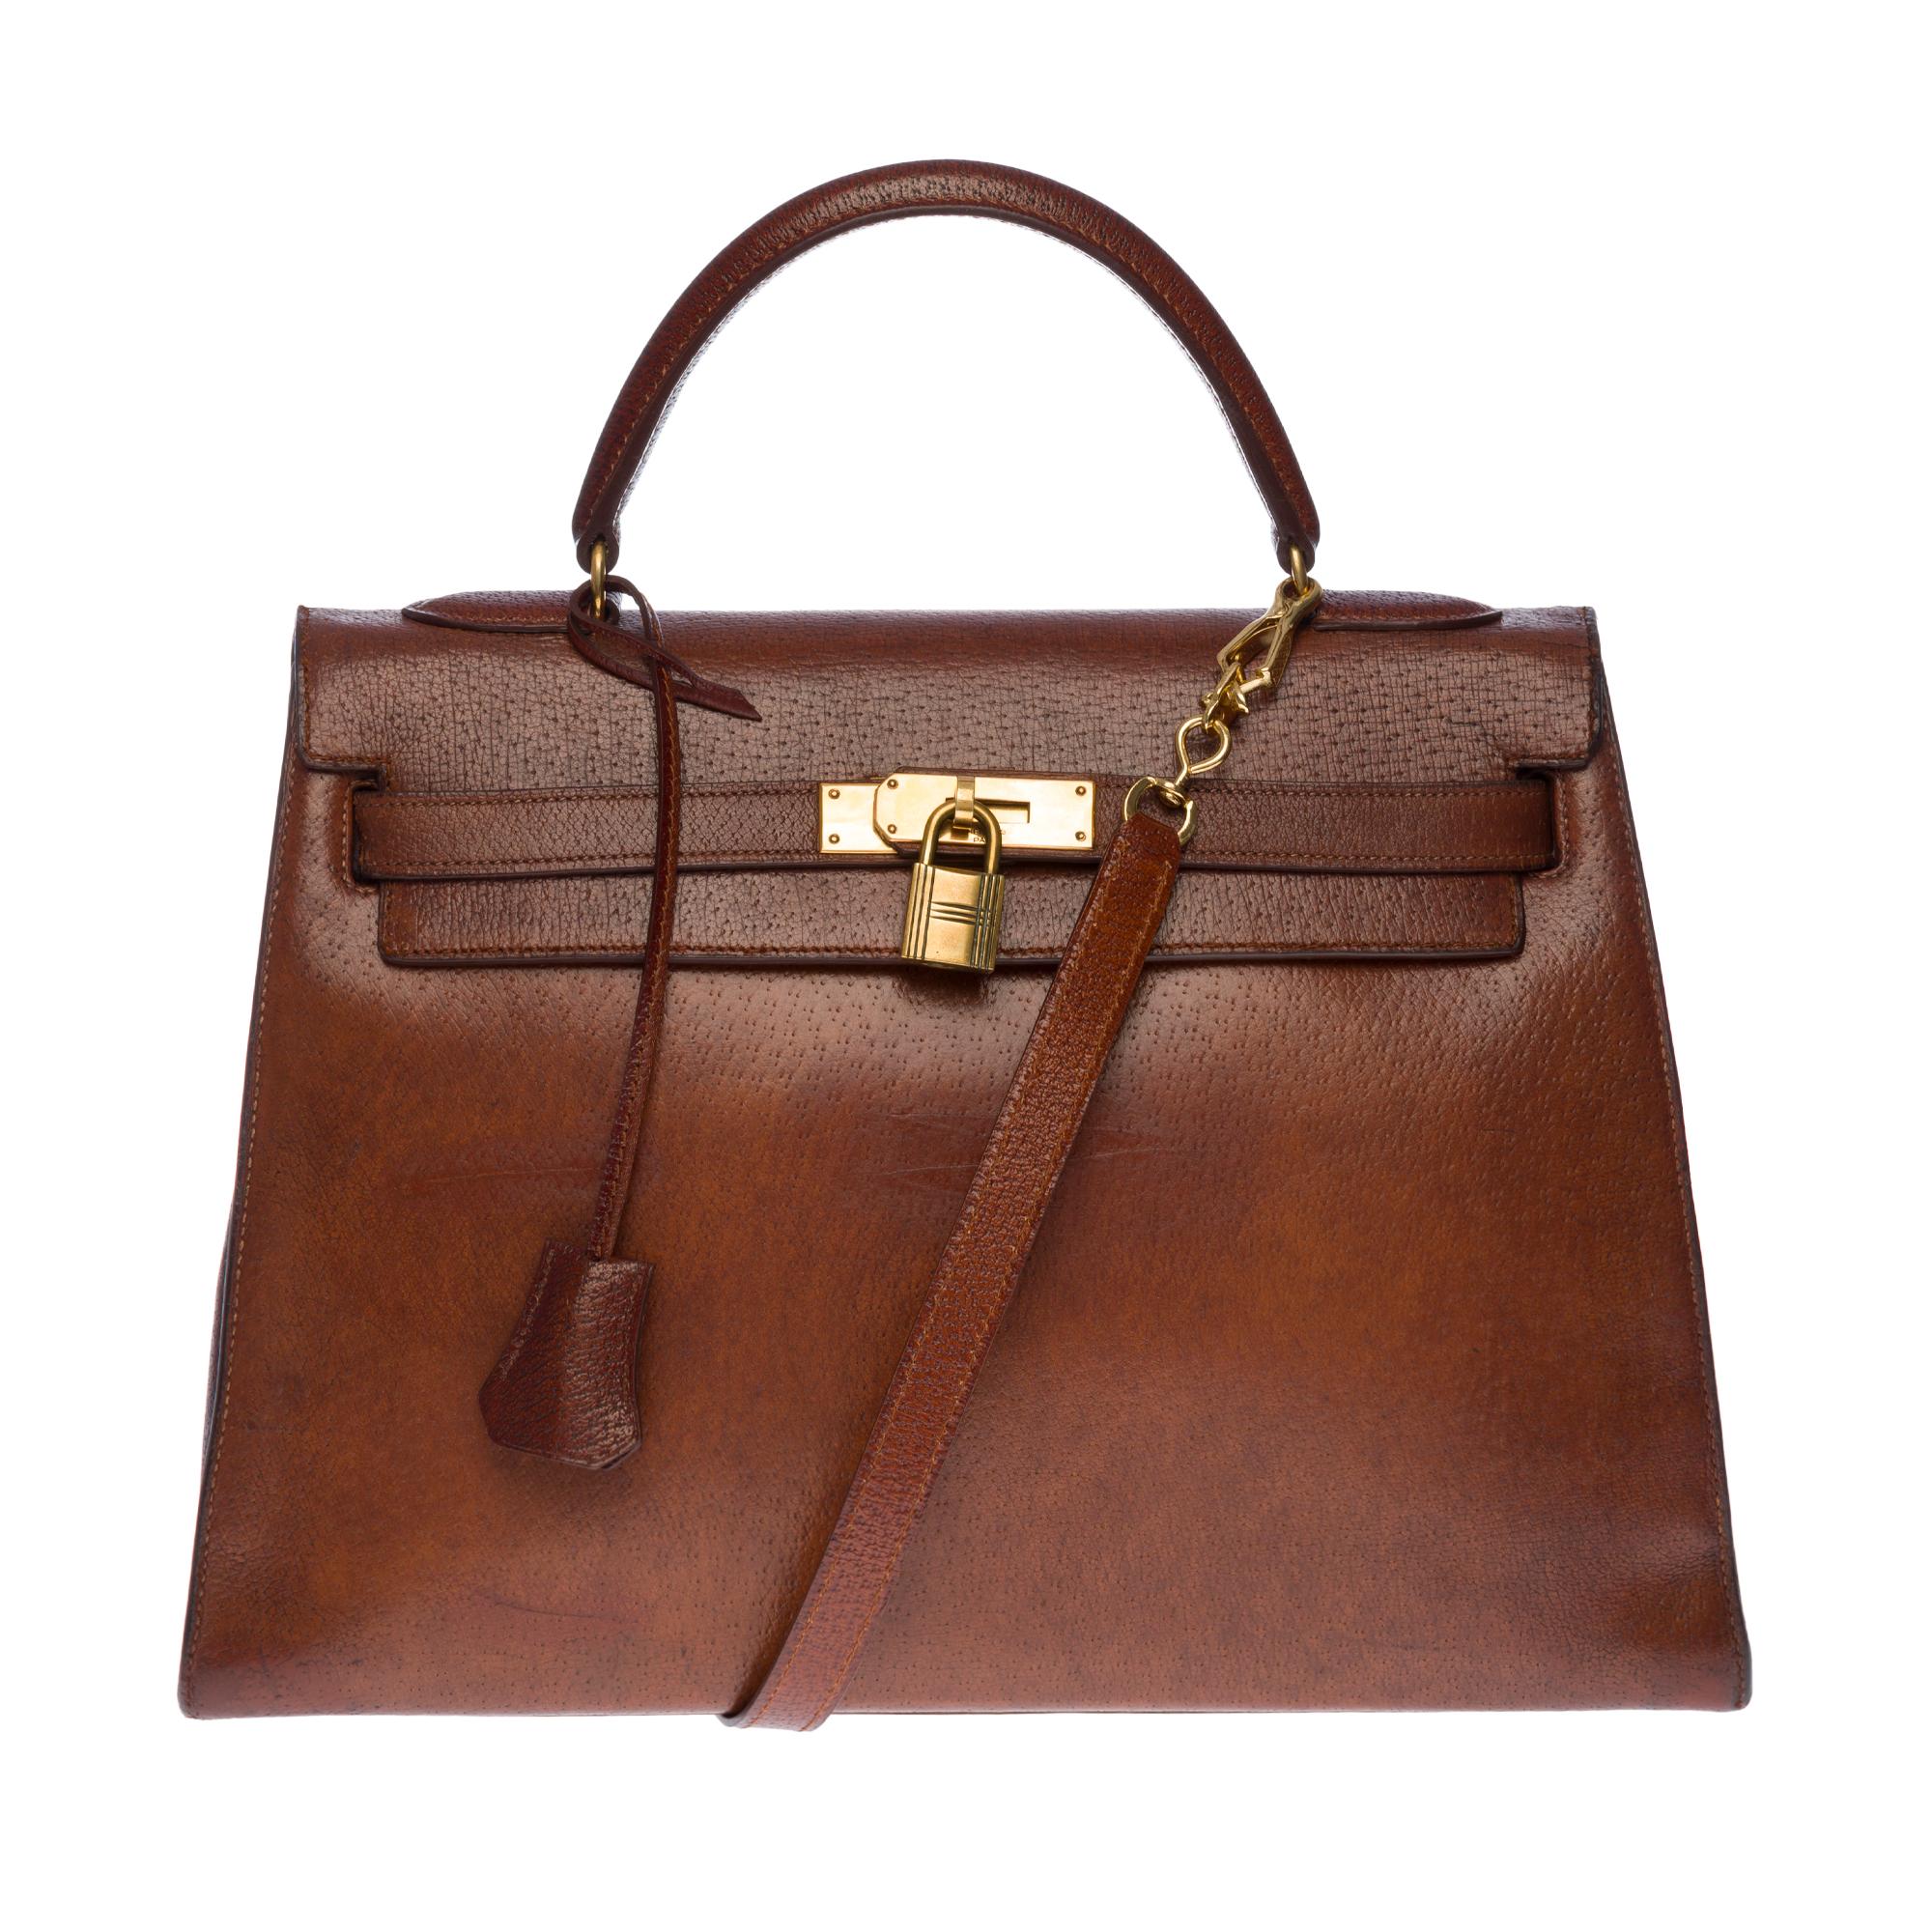 Hermès Kelly 32 handbag with strap in Brown Pecari leather, GHW